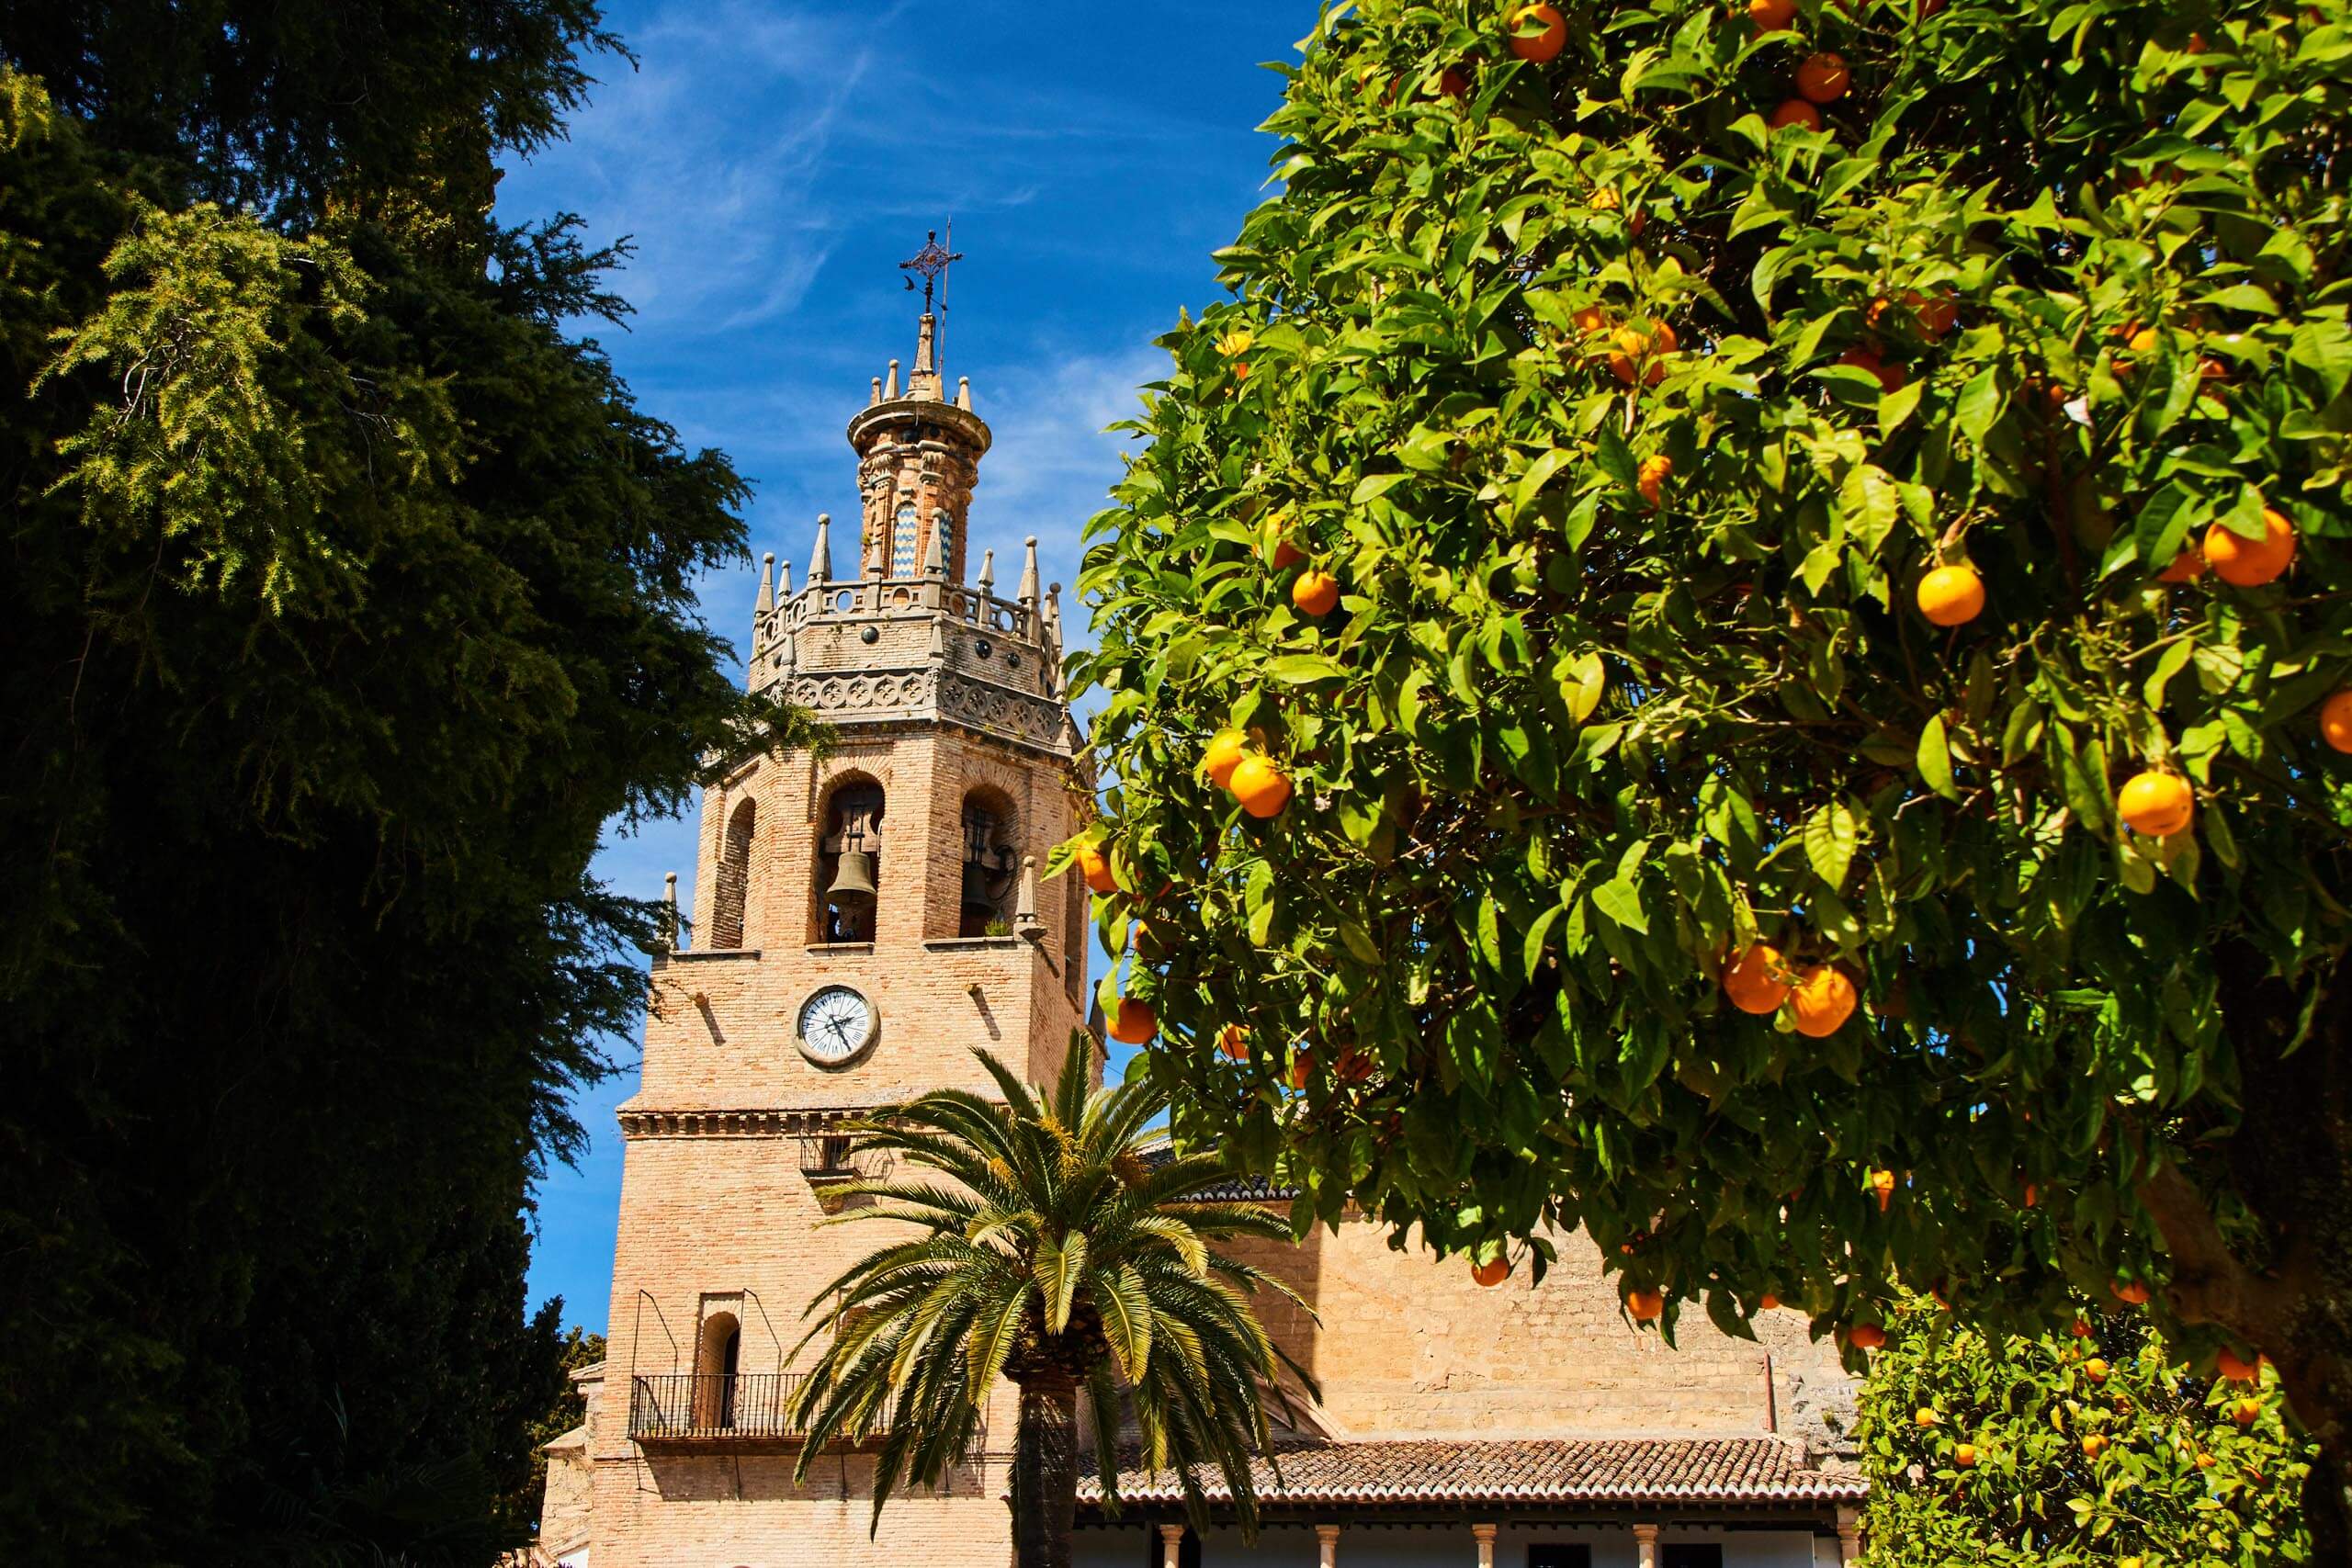 Bell tower of Santa Maria la Mayor